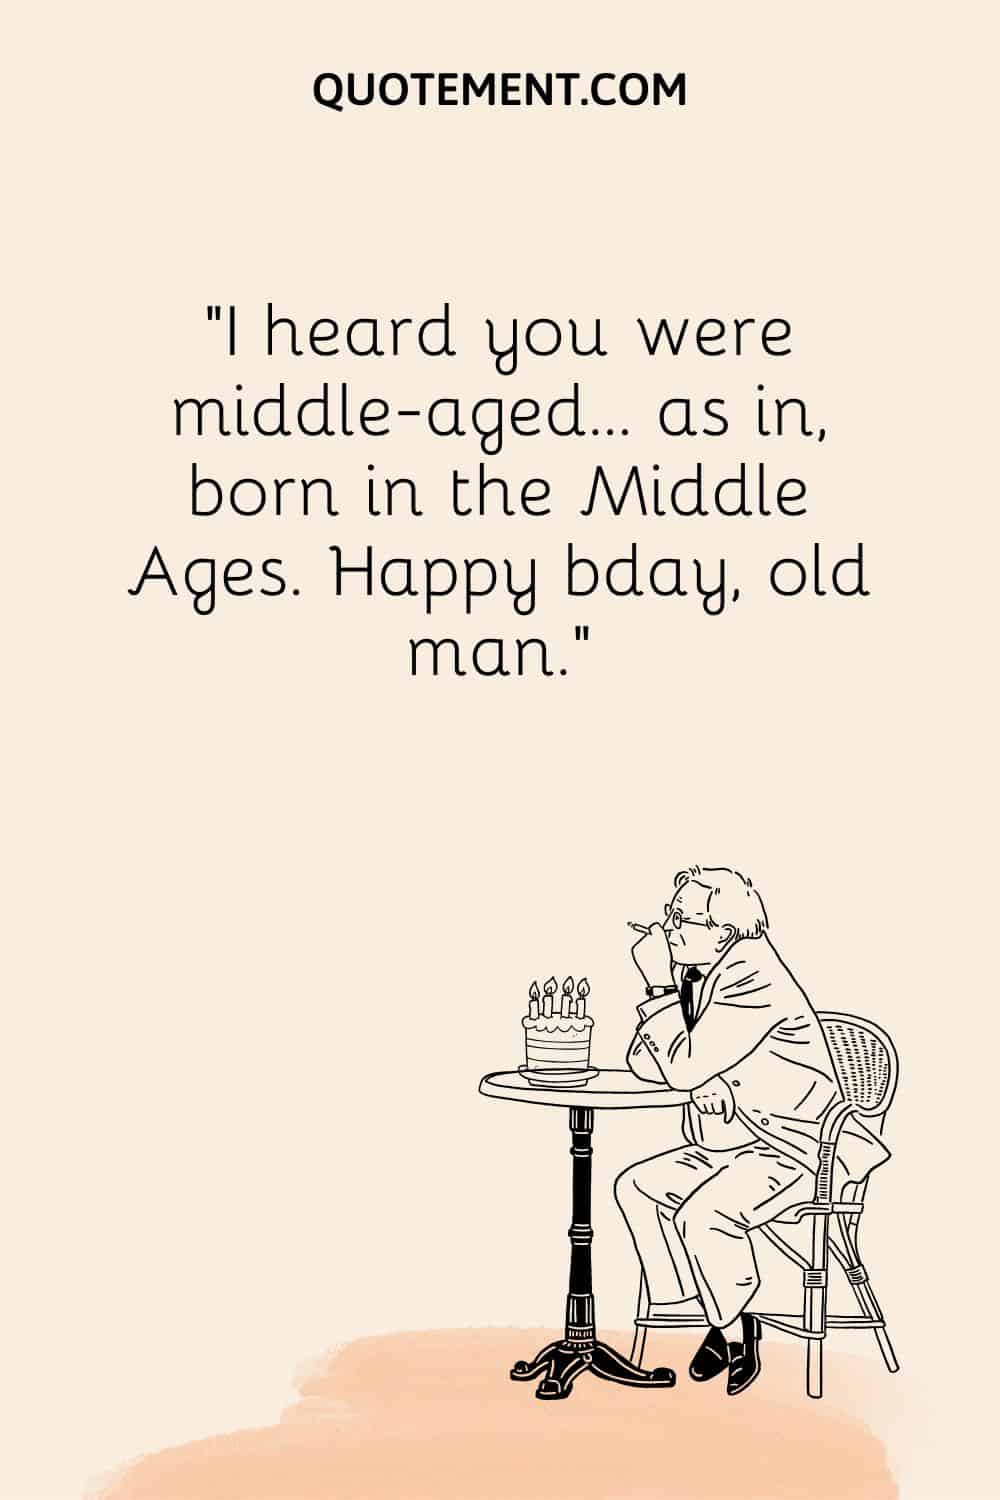 happy birthday old man illustration
